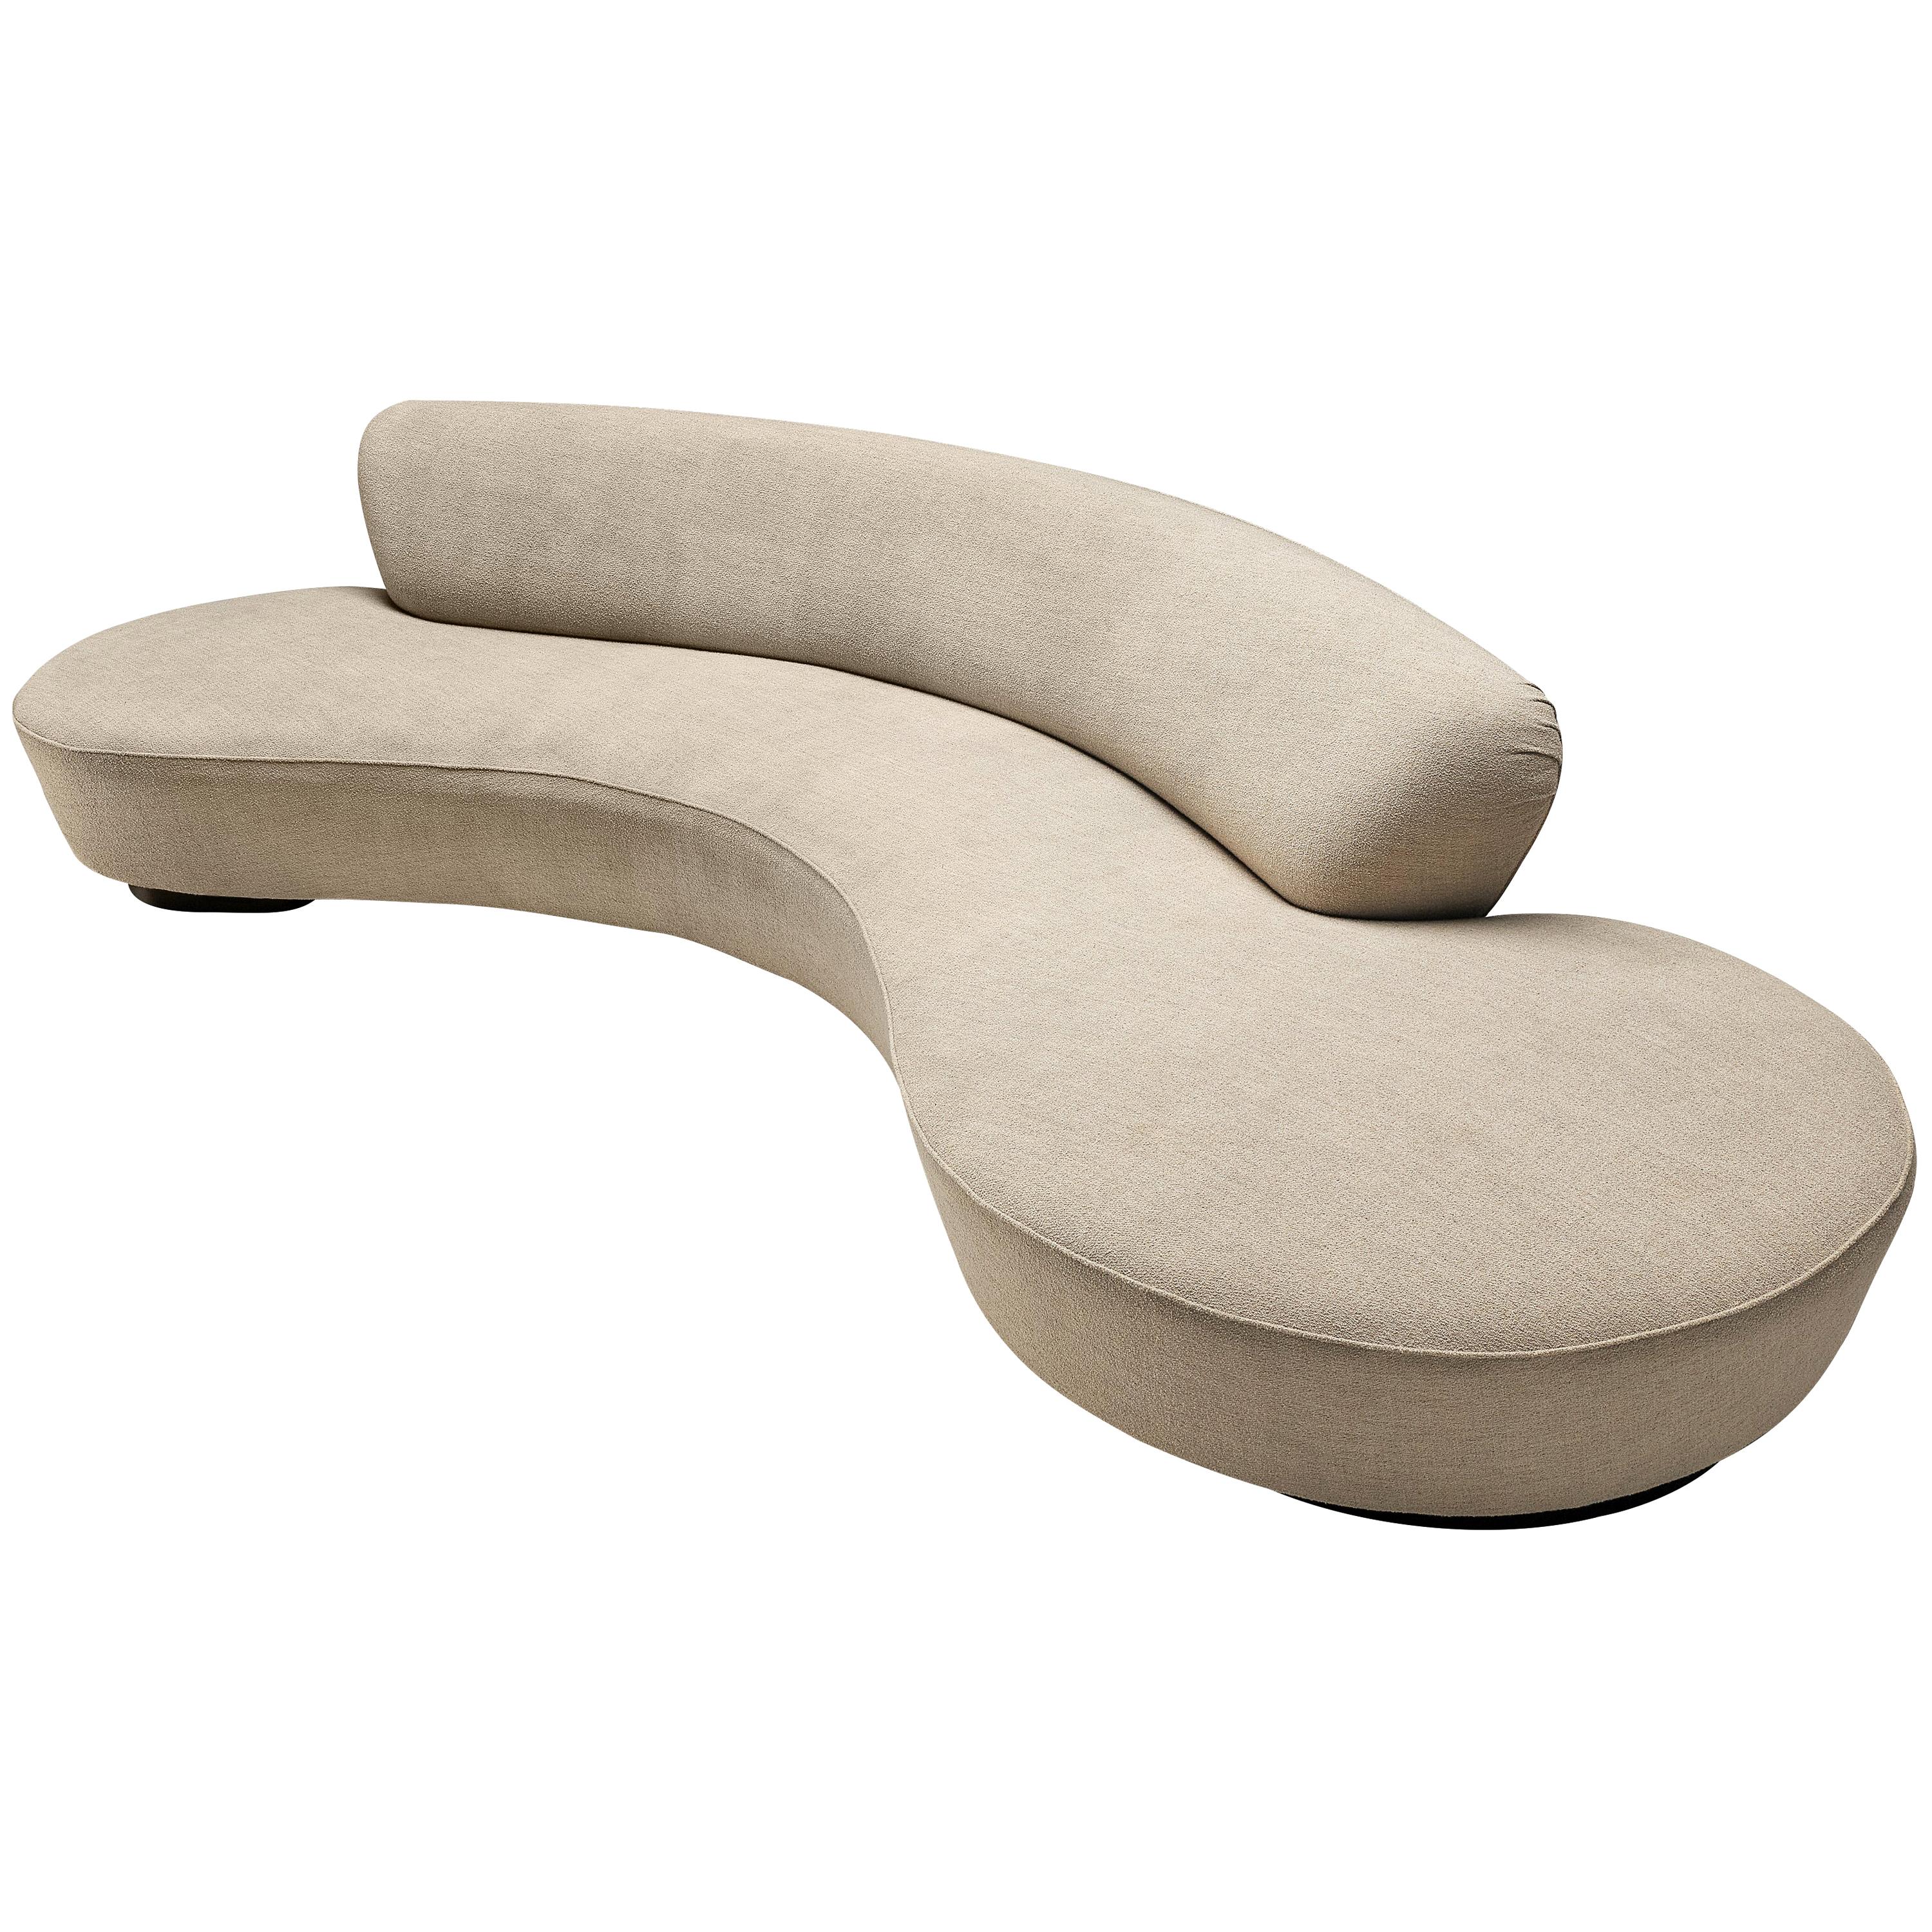 Iconic Vladimir Kagan 'Serpentine' Sofa in Off-White Upholstery